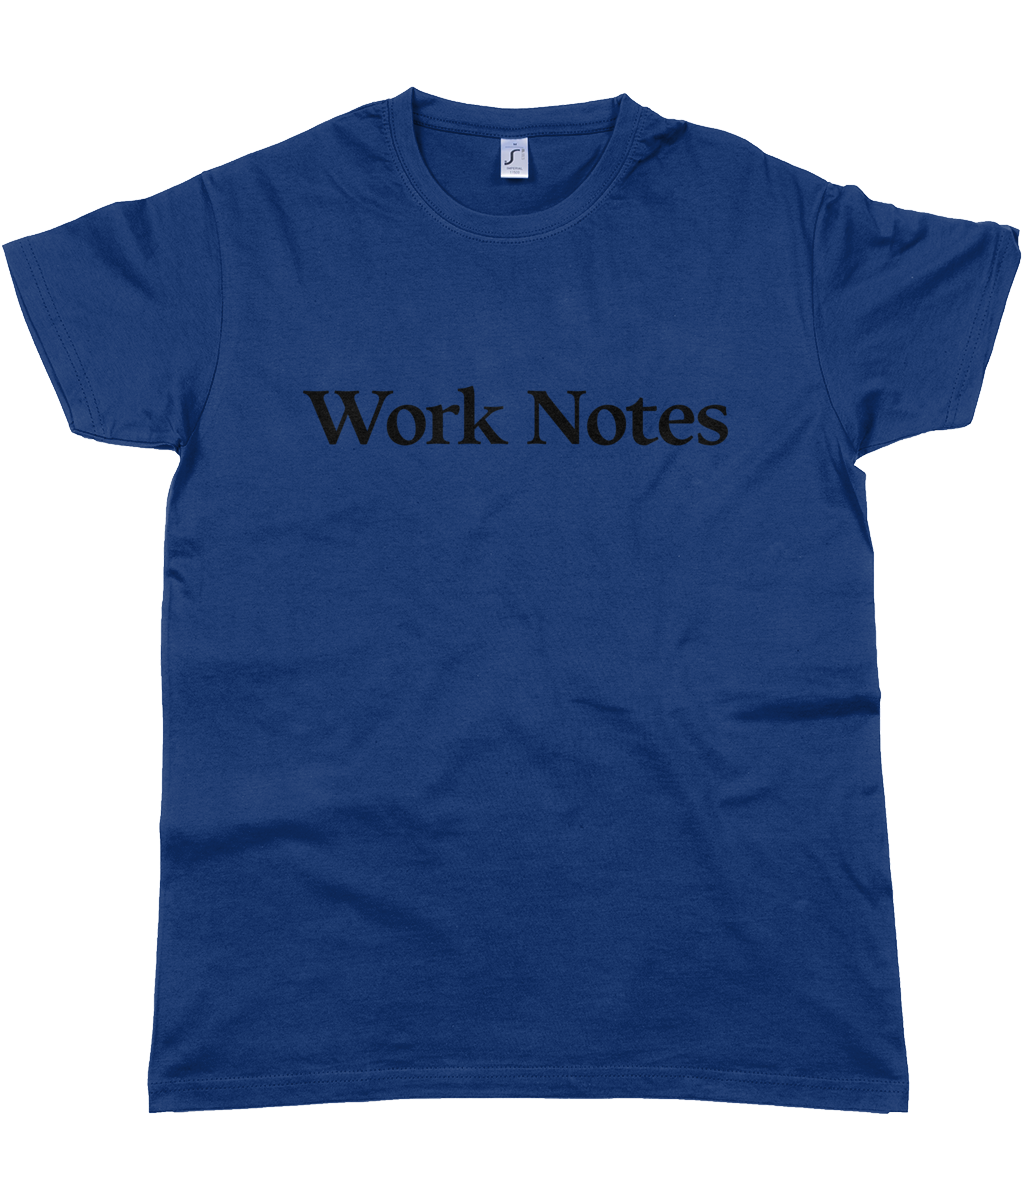 Work Notes T-Shirt